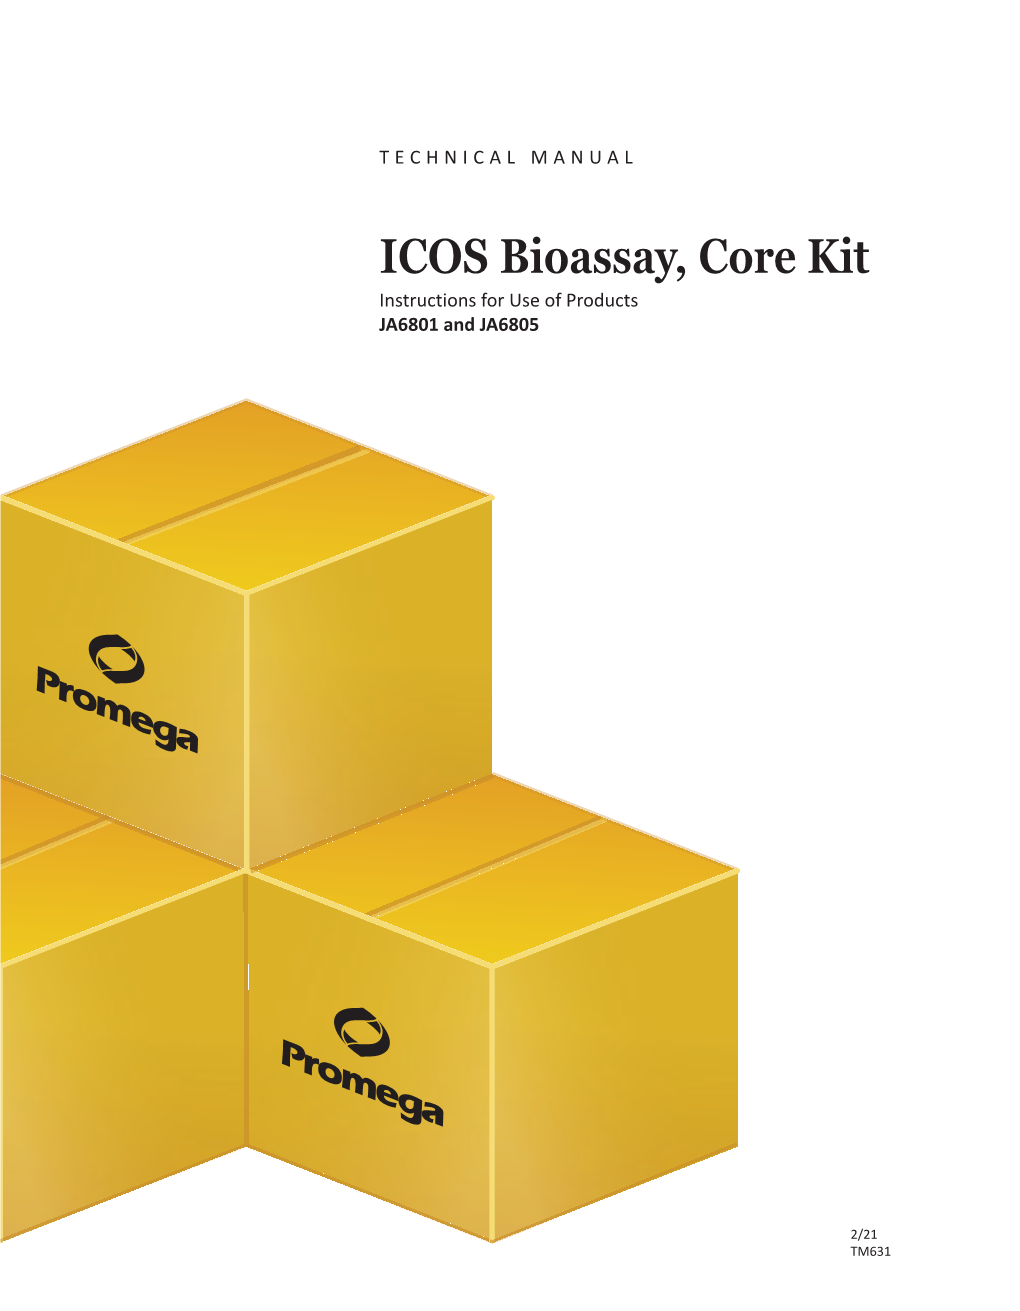 ICOS Bioassay, Core Kit Technical Manualpdf